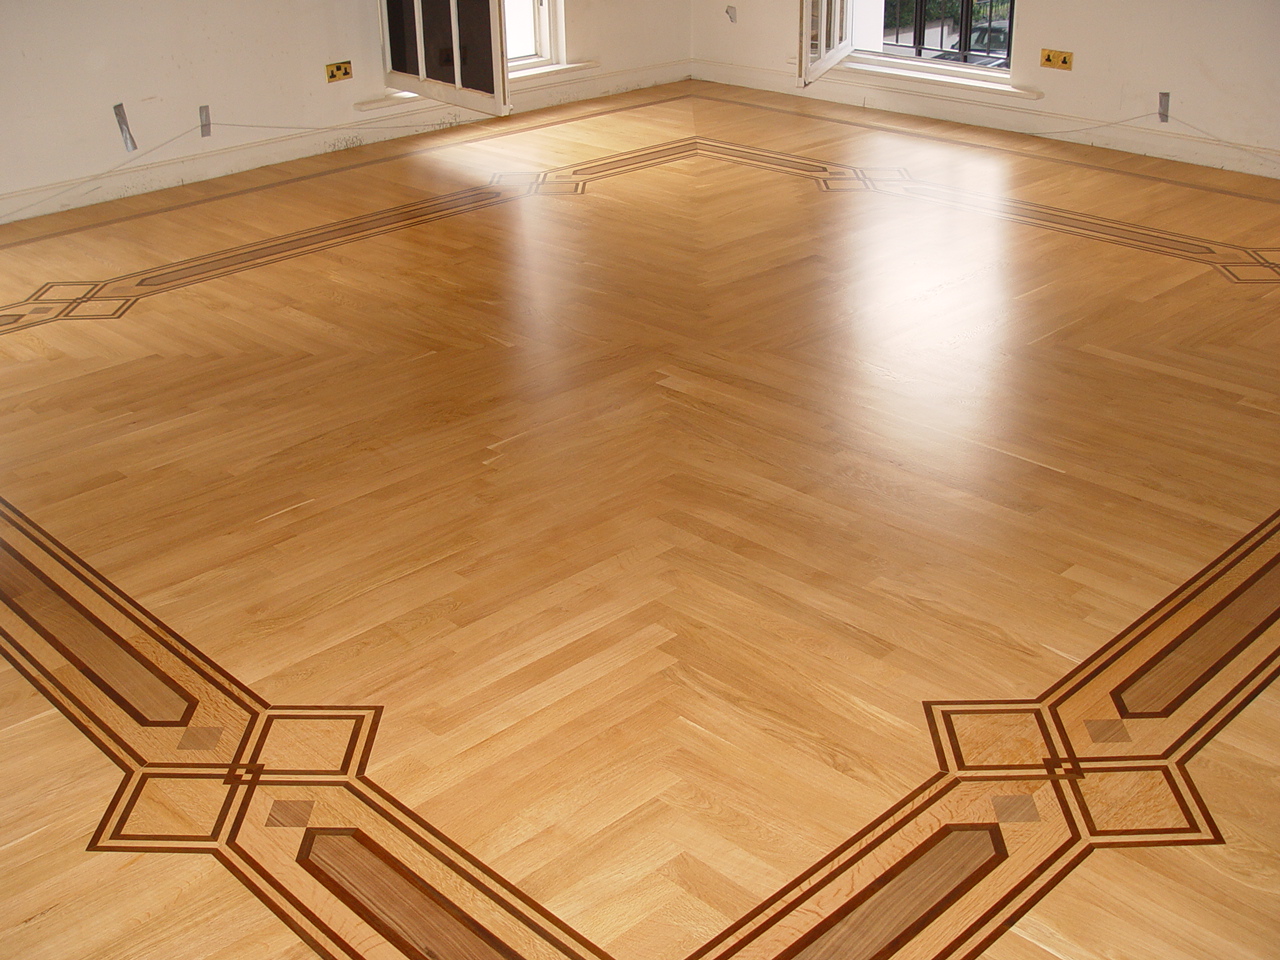 Wood and Floors Design Floors Gallery